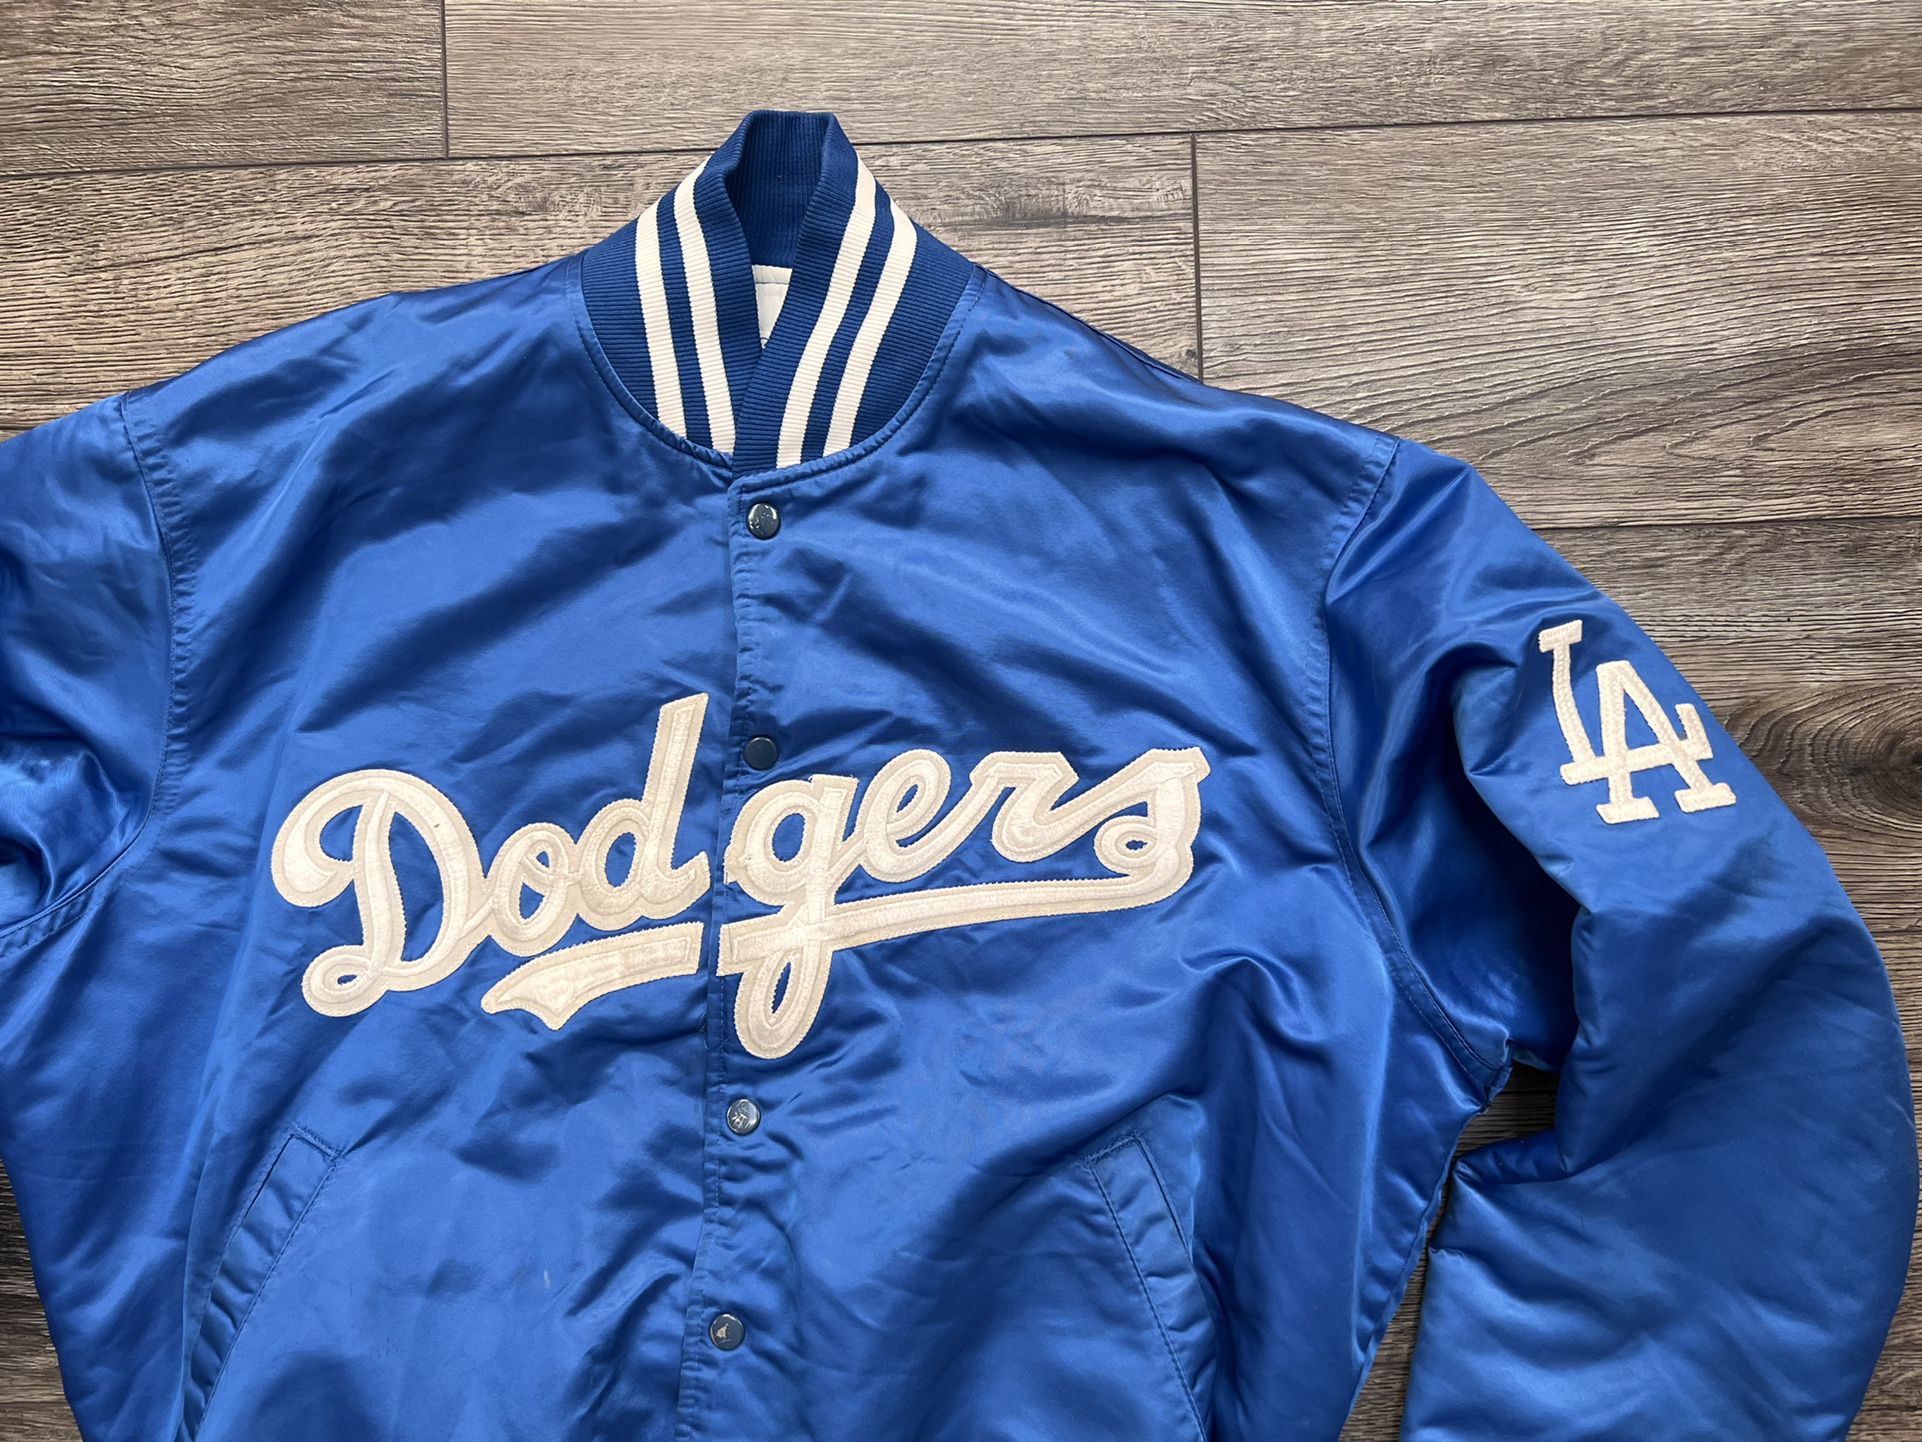 Dodgers 1980s Starter Jacket – RCNSTRCT studio